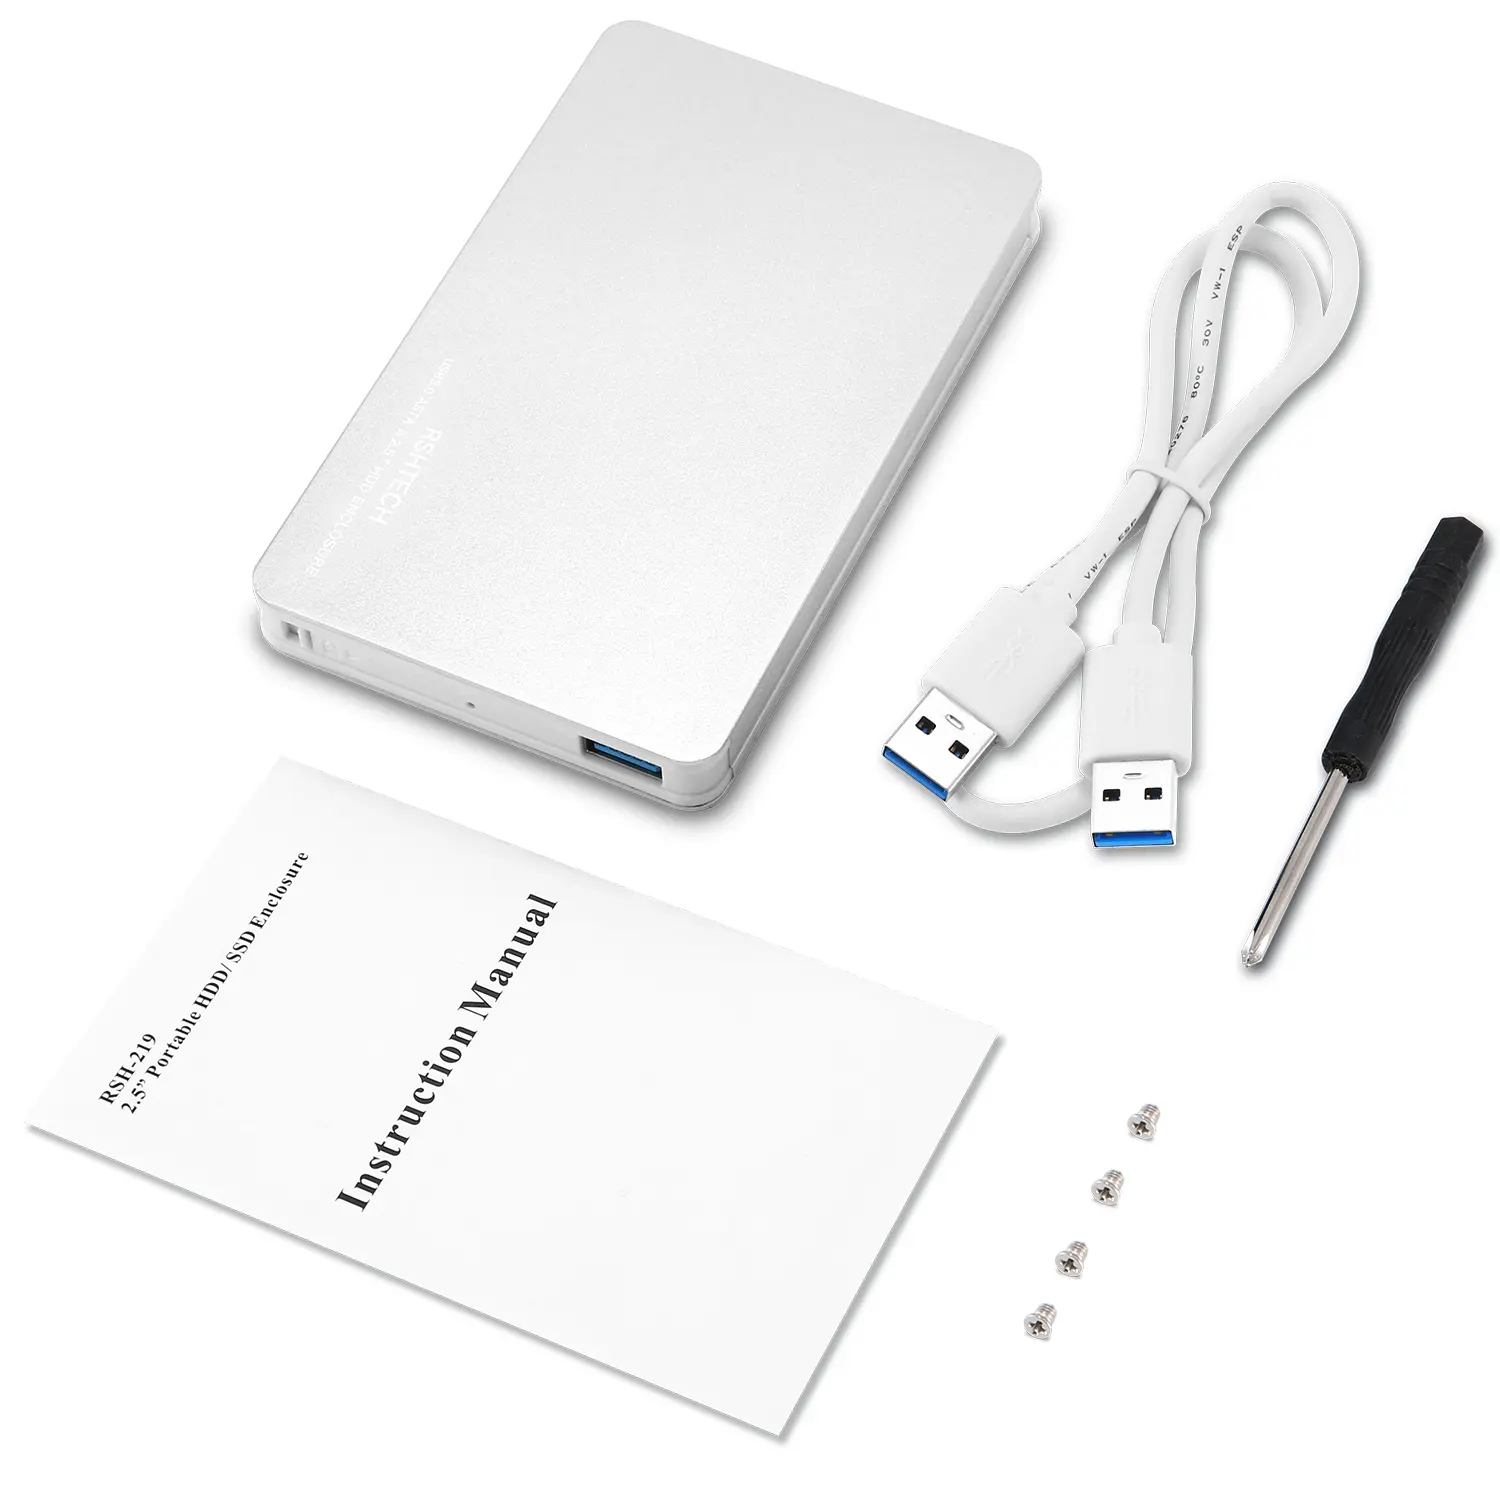 RSHTECH Portable HDD/SSD Enclosure Hard Disk Enclosure with UASP Protocol USB 3.0 2.5 Inch SATA Hard Drive Enclosure